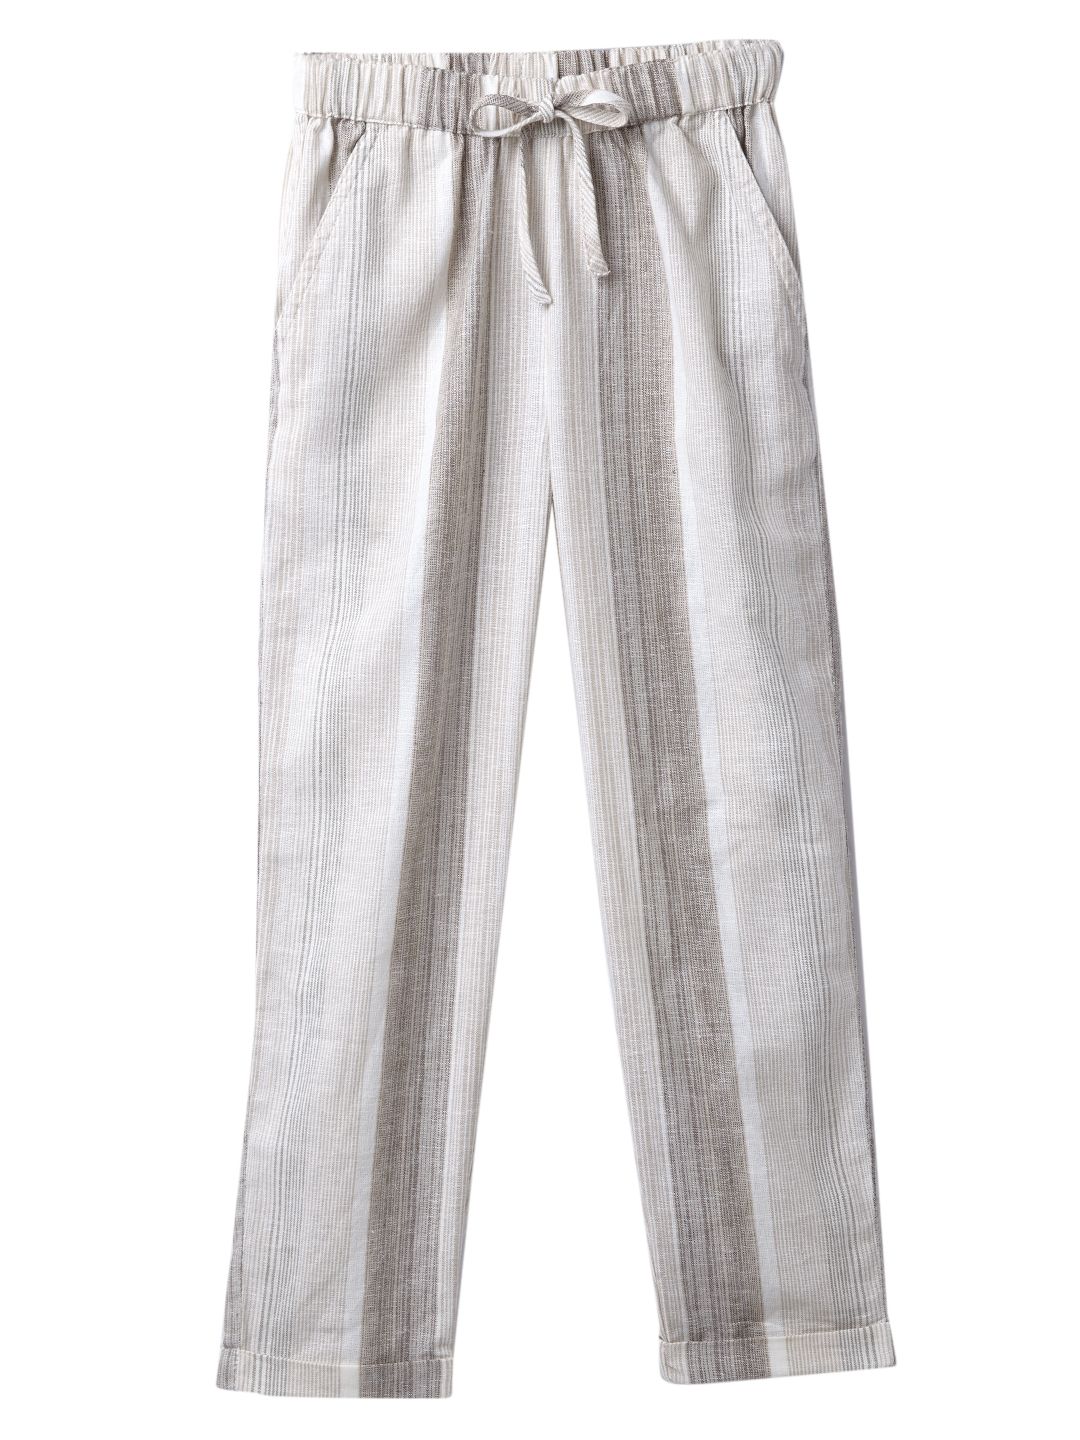 Boys Linen Blend Outerwear Pants - Off-white